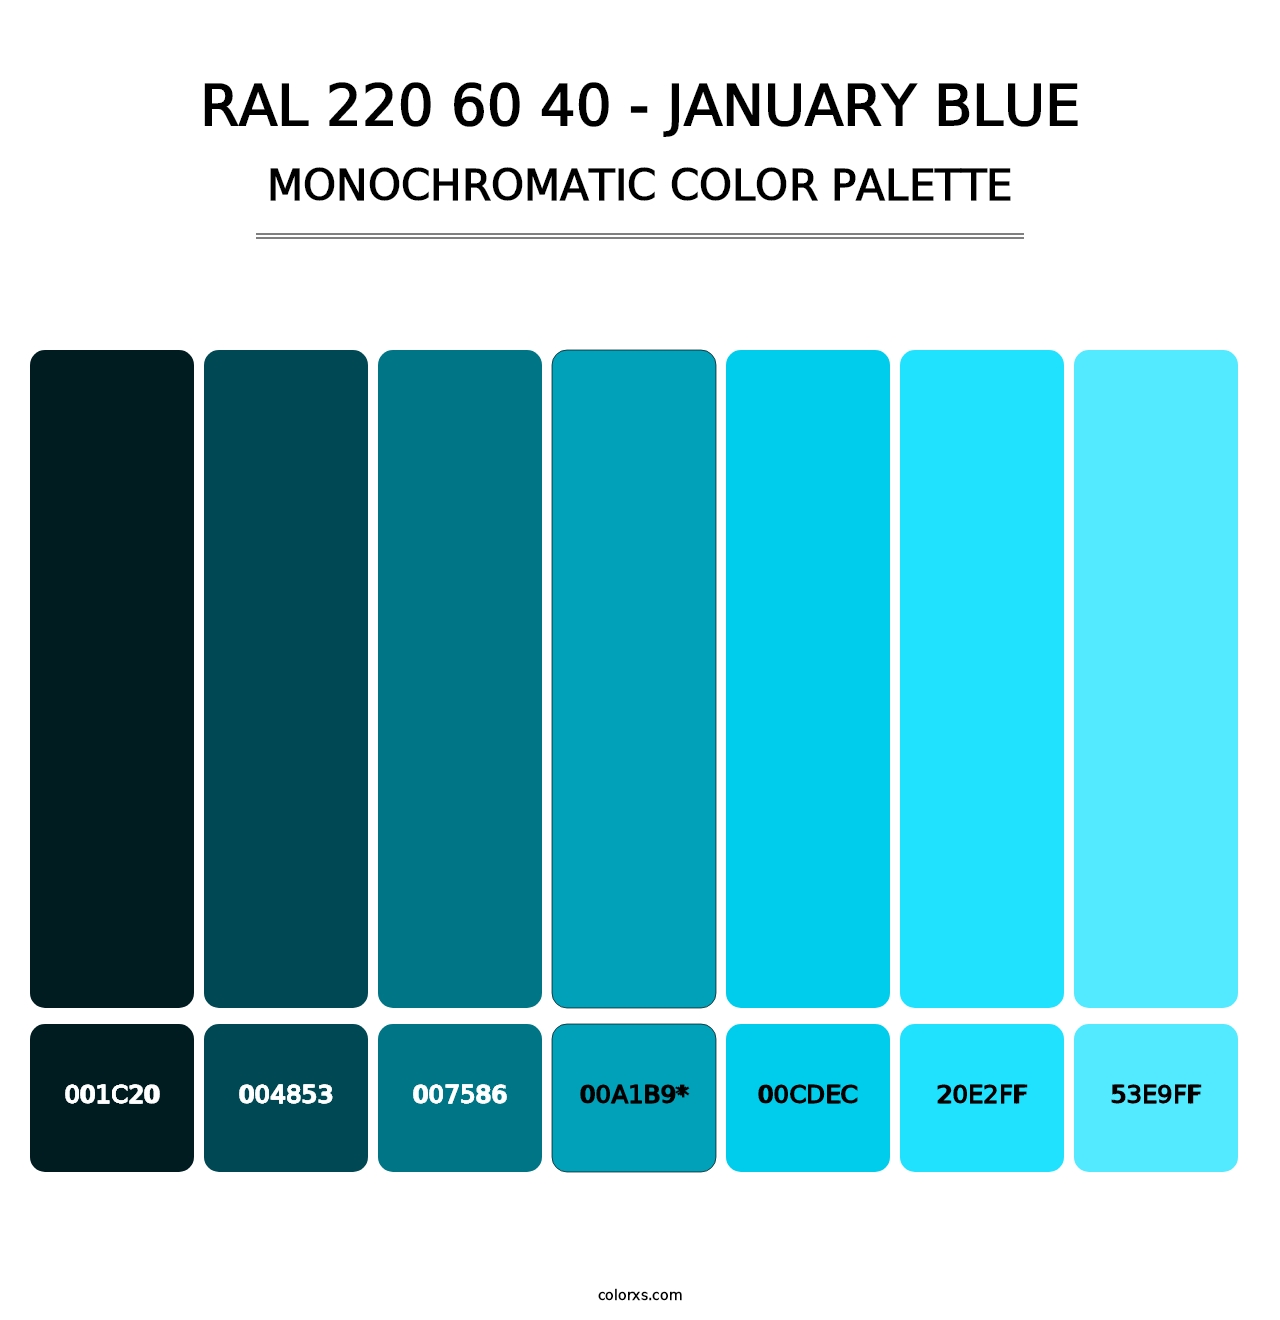 RAL 220 60 40 - January Blue - Monochromatic Color Palette